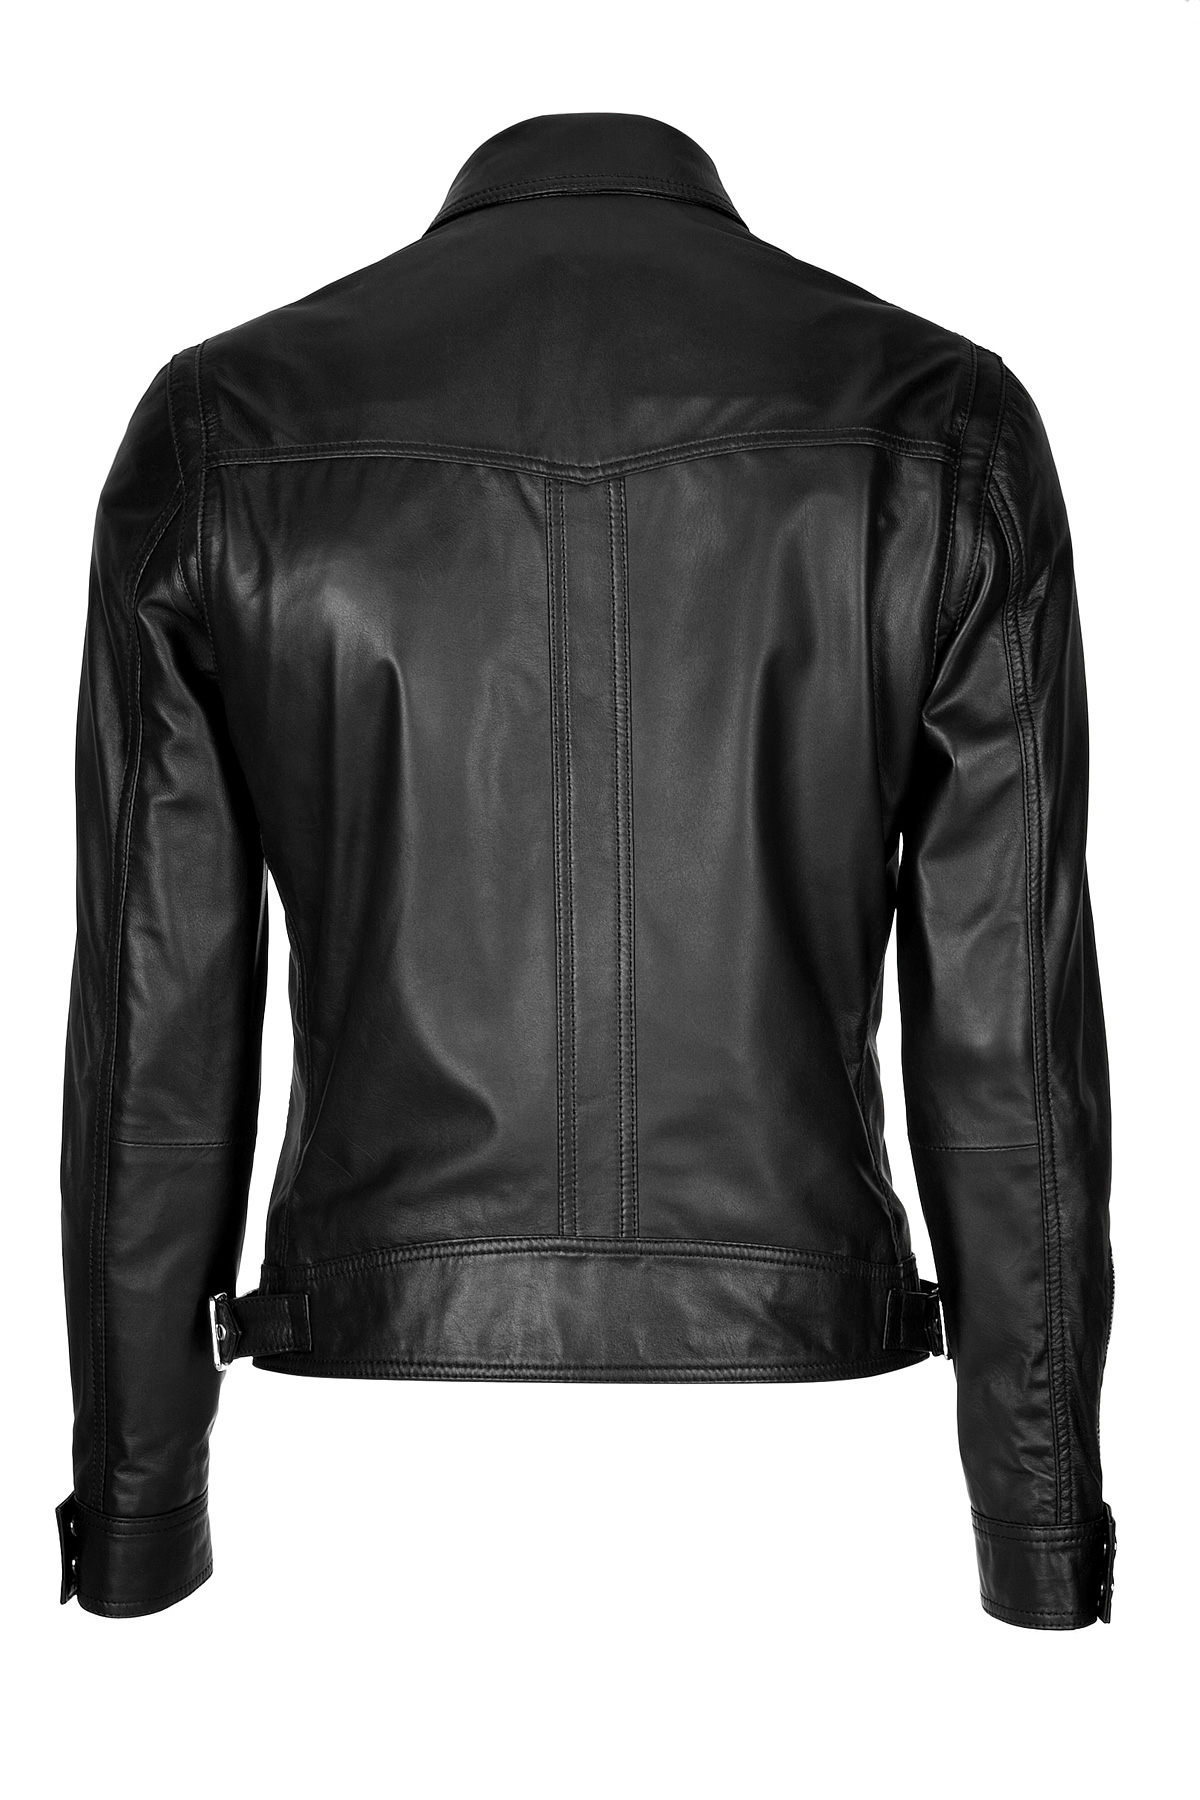 Lyst - The Kooples Leather Jacket in Black for Men